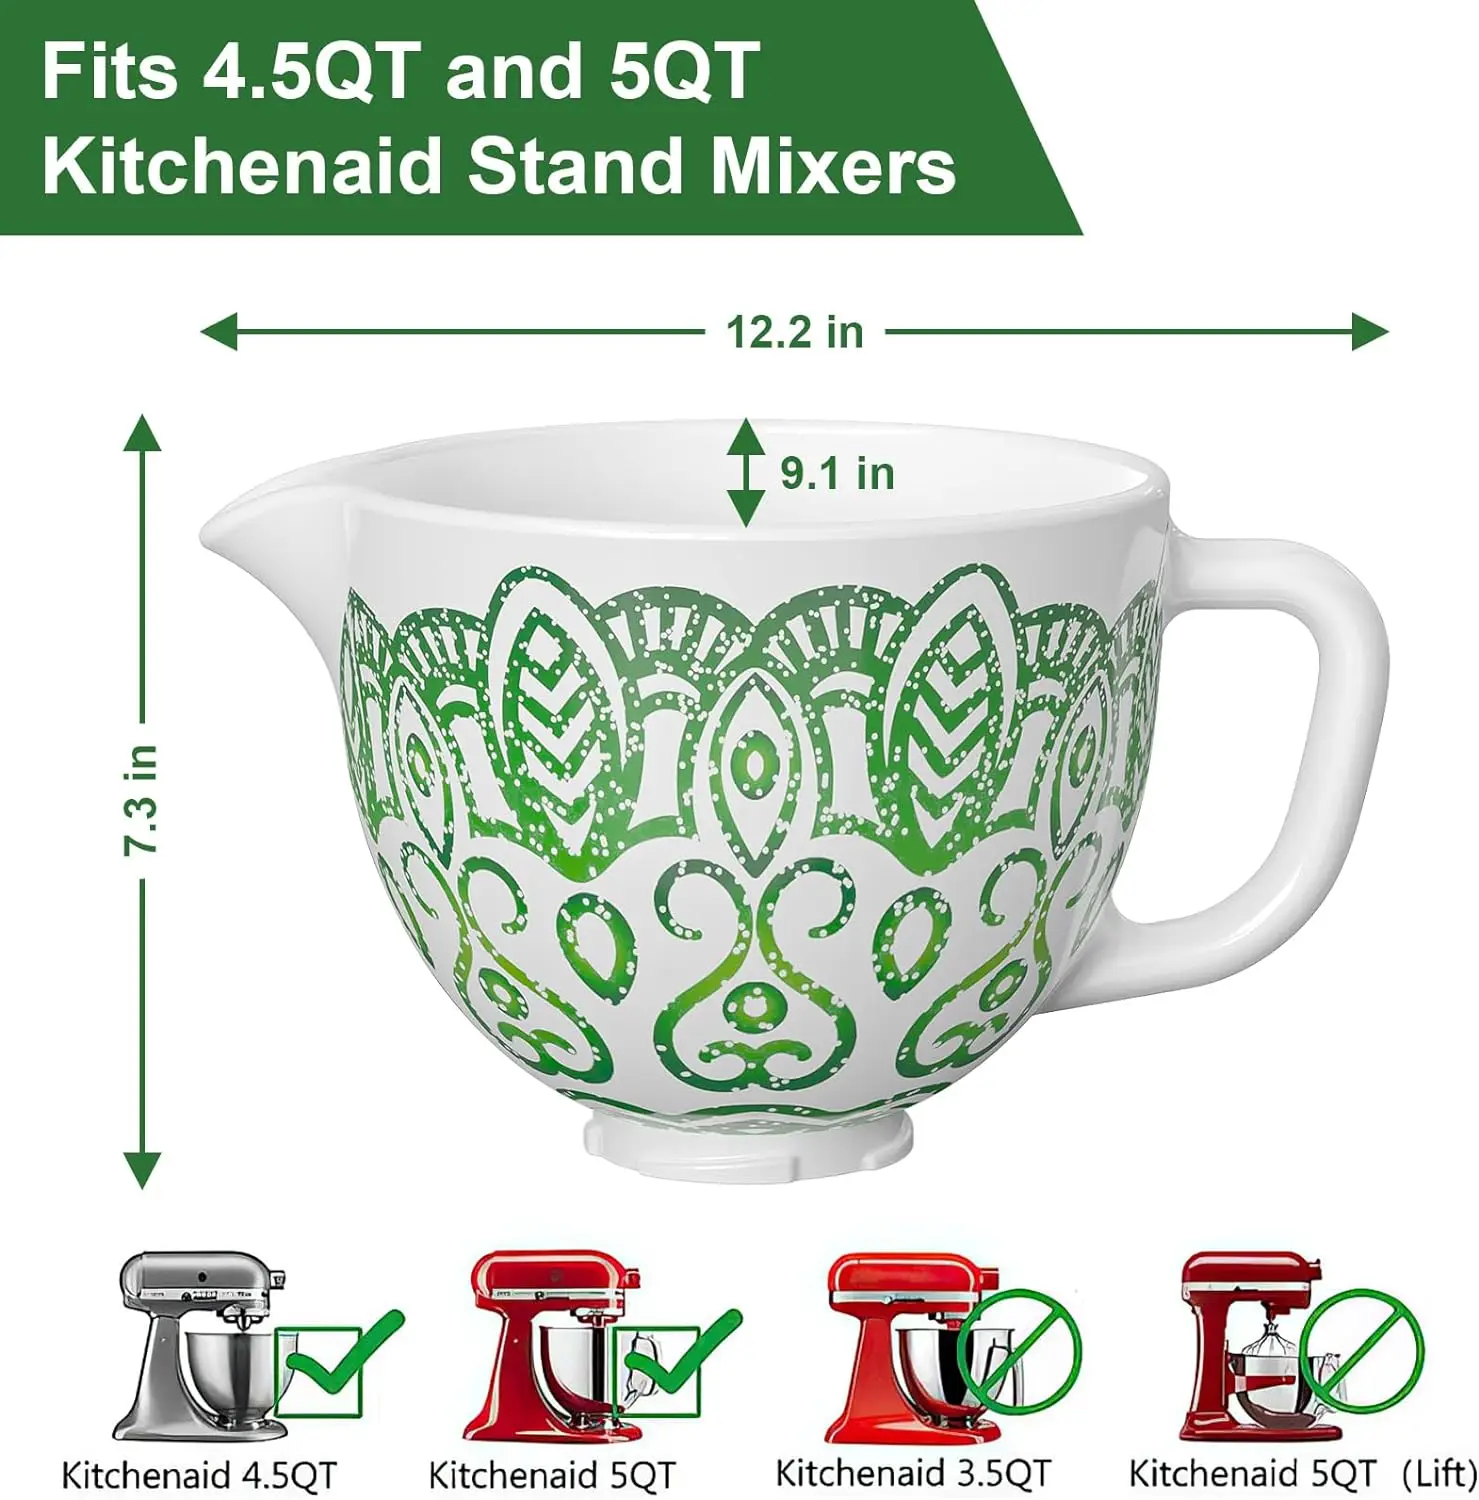 Gvode Ceramic Mixer Attachment Fit all Kitchenaid Mixer Bowl, 4.5-5Q  Tilt-Head Ceramic Bowl for Kitchenaid Mixer, 5 QT Kitchenaid Bowl -  White(does not include kitchenaid stand mixer)